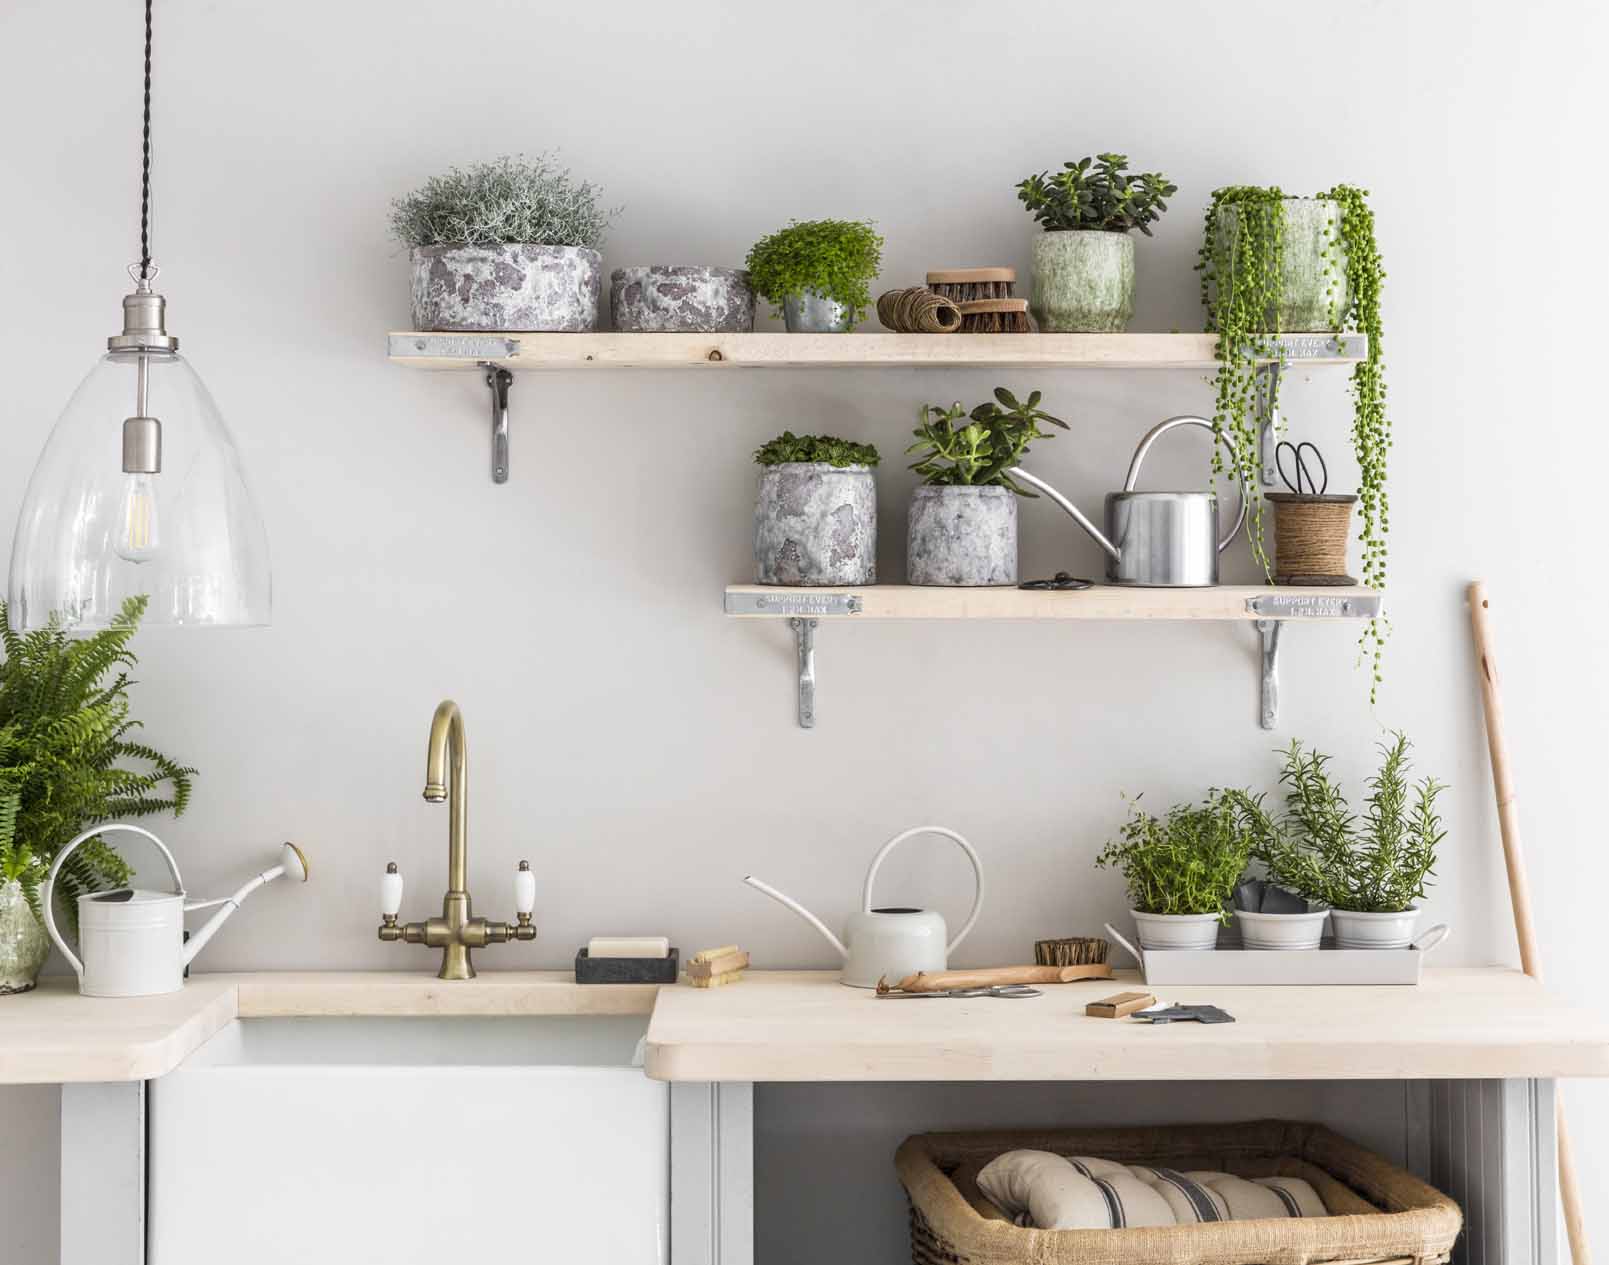 Adding-plants.. 80+ Unusual Kitchen Design Ideas for Small Spaces in 2021